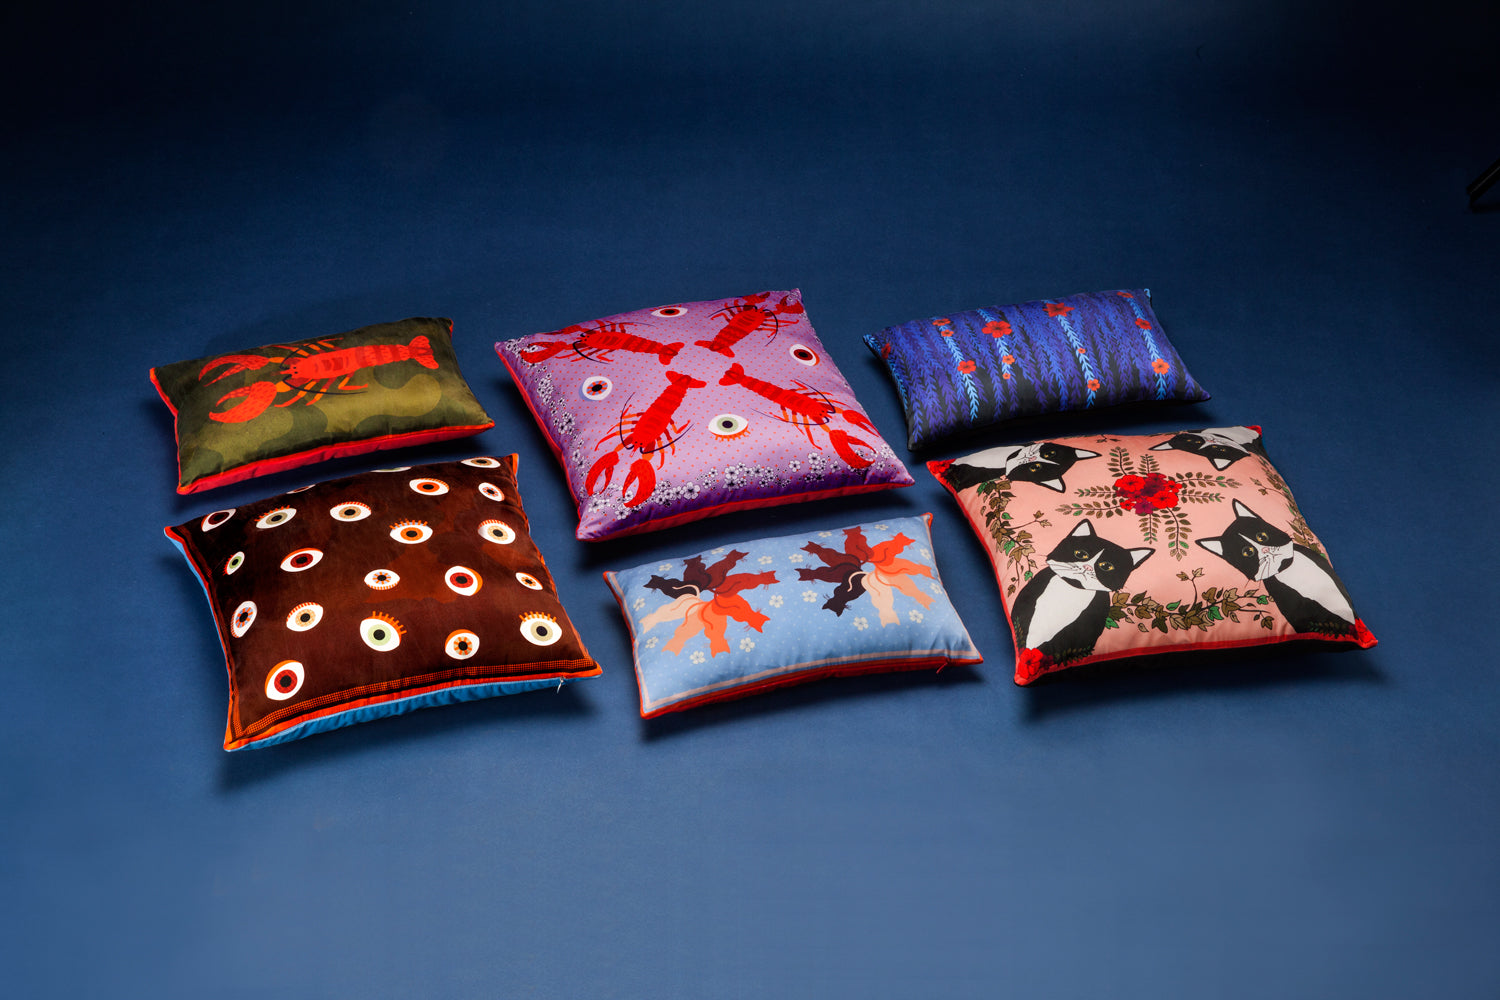 EYE silk cushion designer cushions, silk scarfs, rugs and bags - My Friend Paco